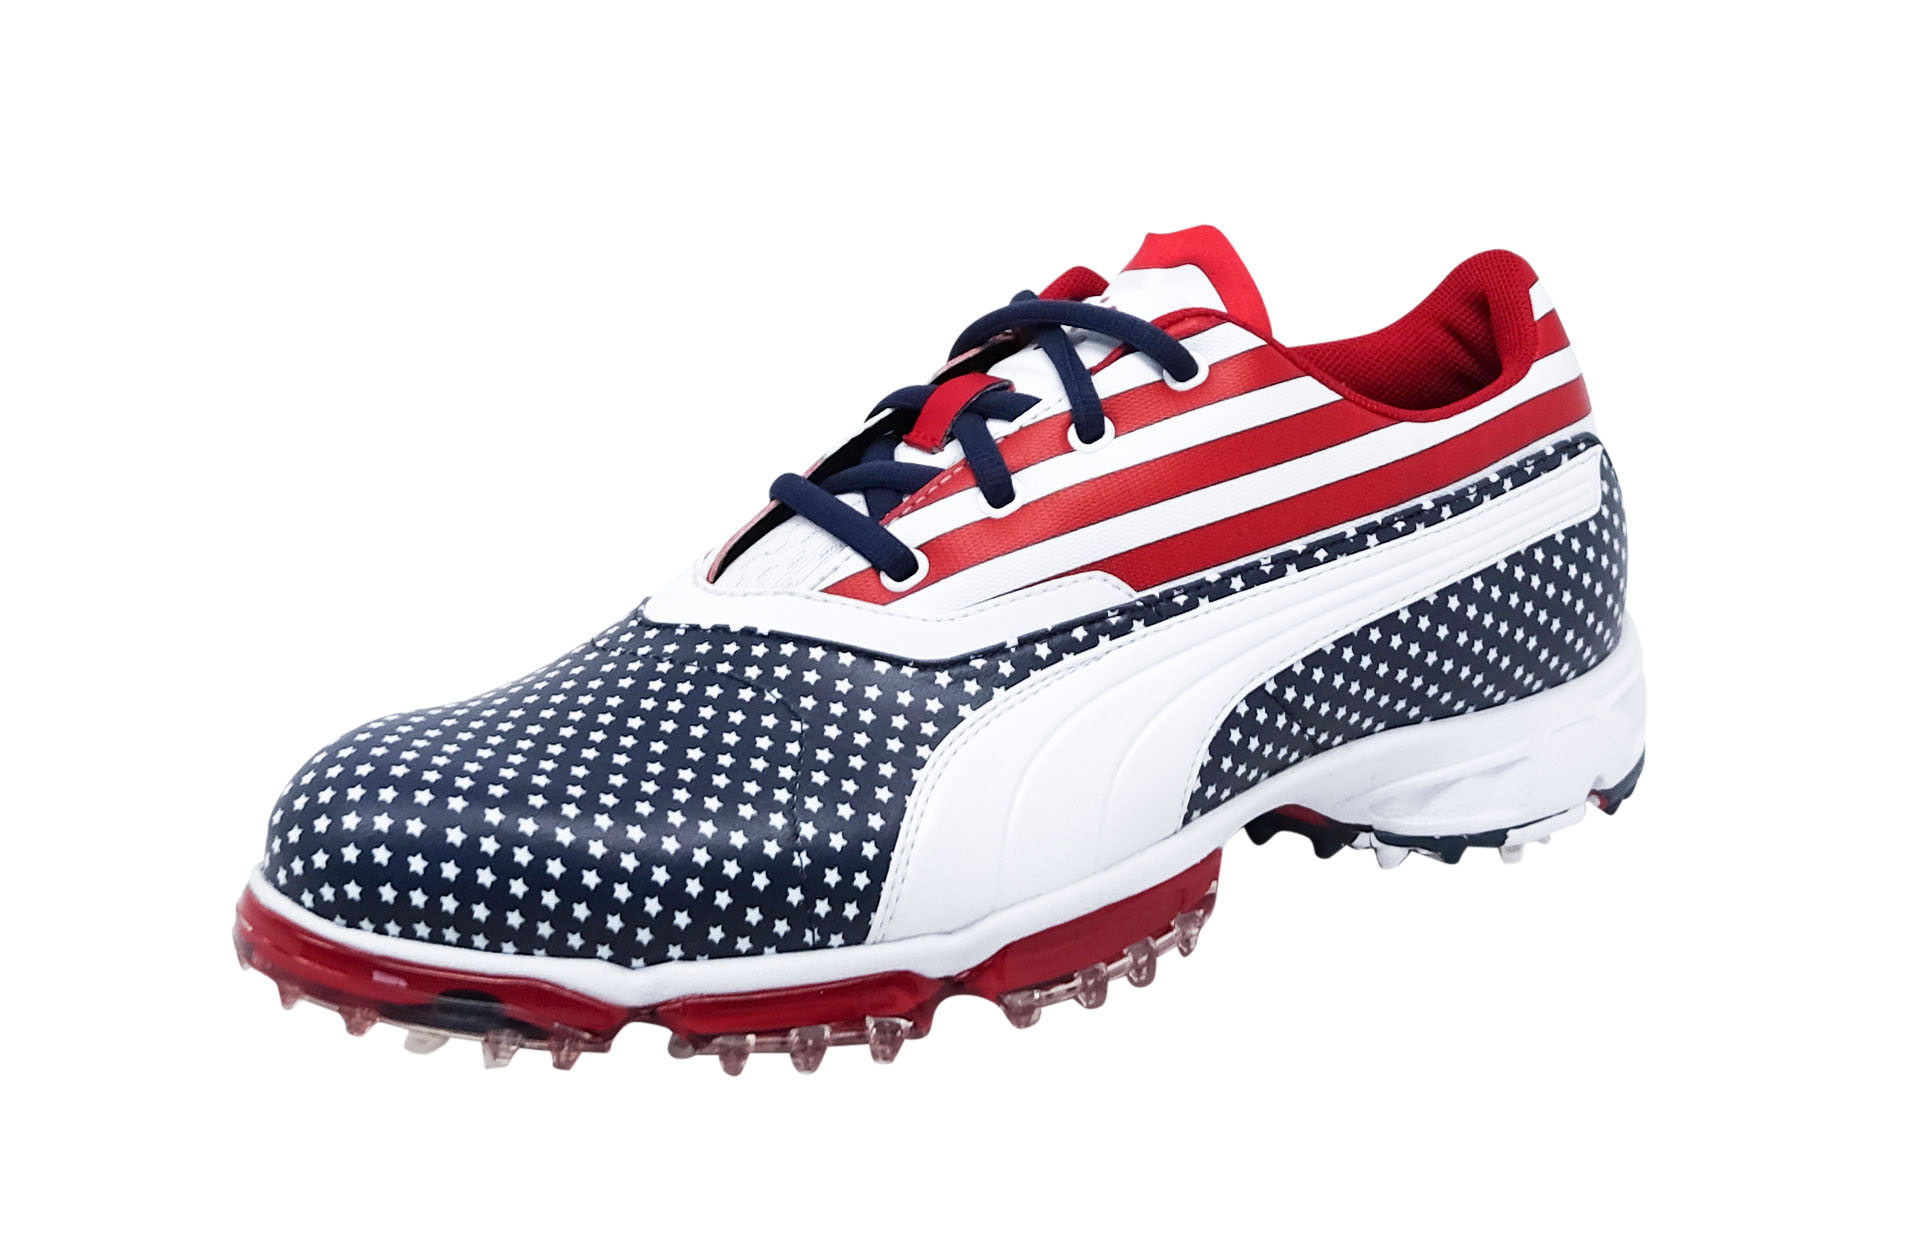 american flag puma golf shoes